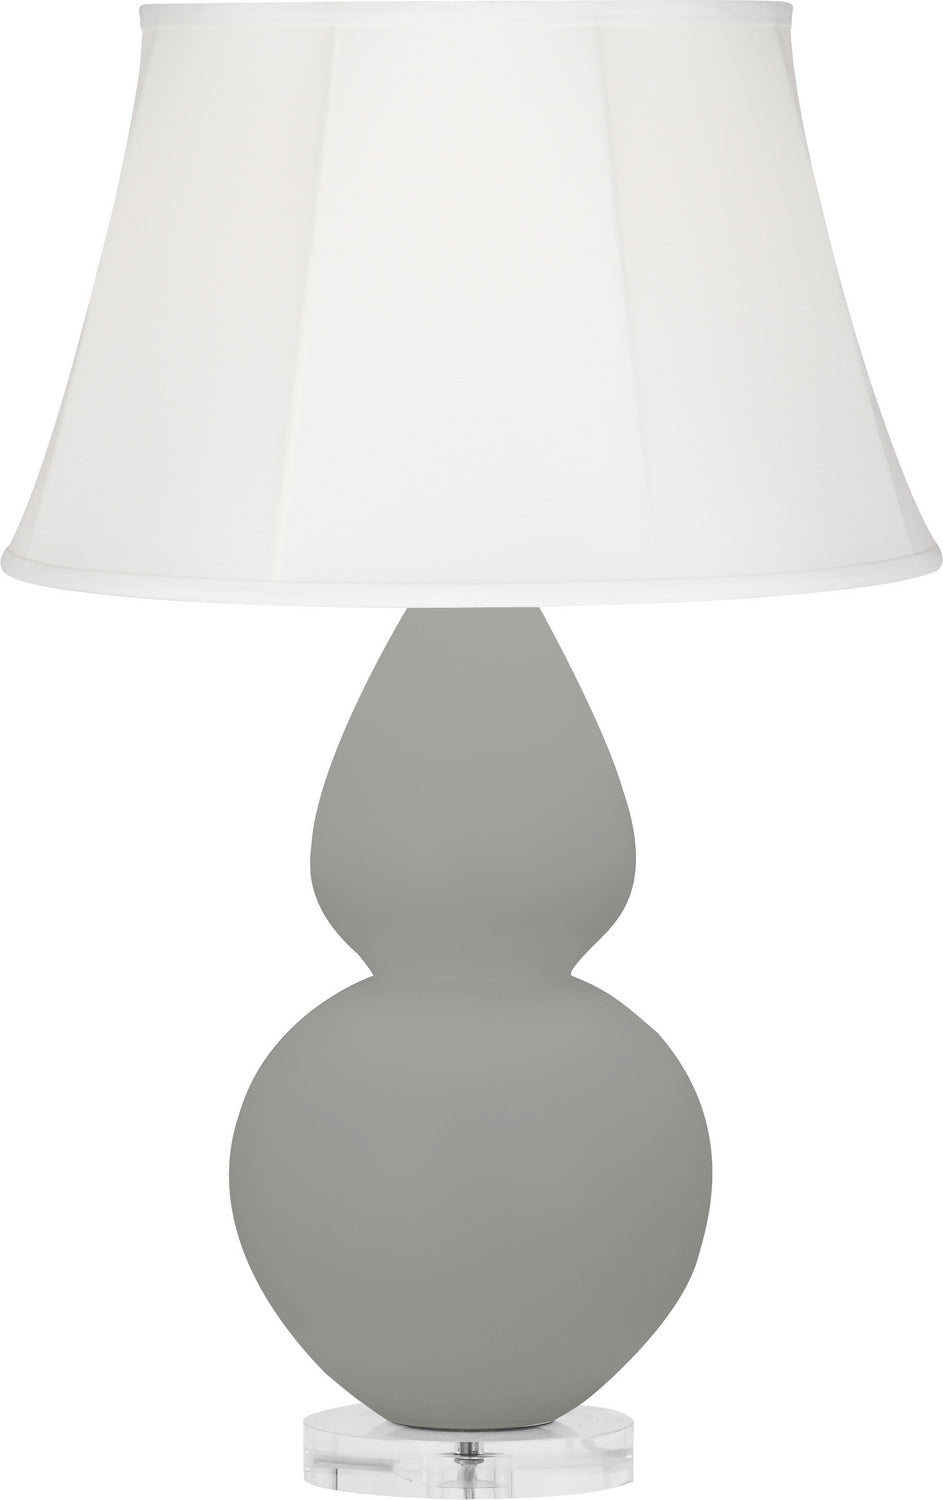 Robert Abbey - MST61 - One Light Table Lamp - Double Gourd